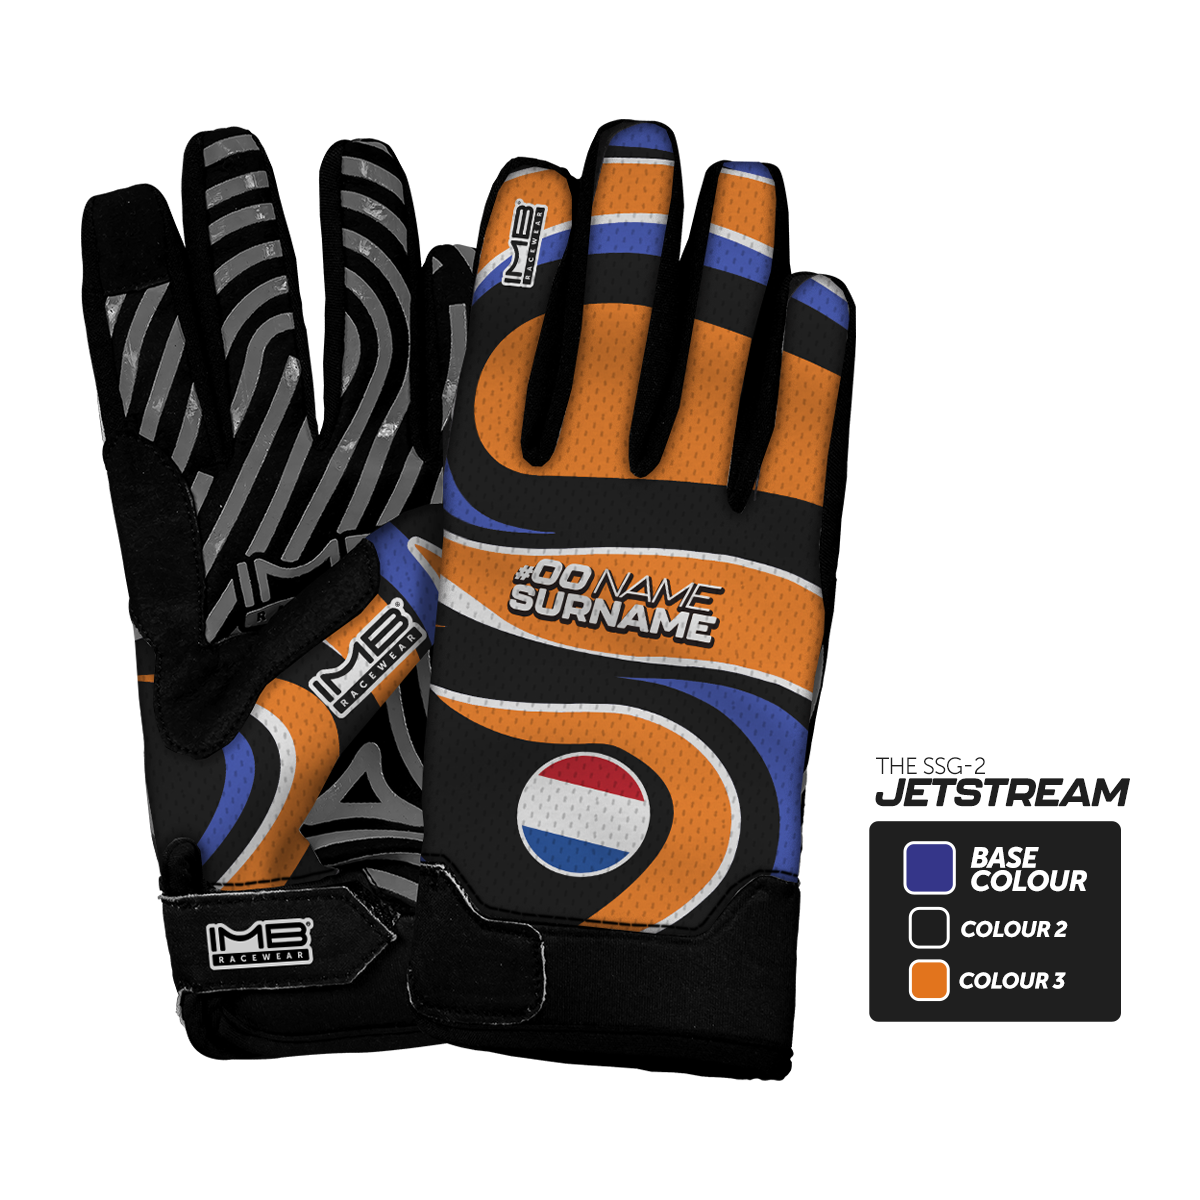 The Jetstream SSG-2 Short Sim Racing Gloves